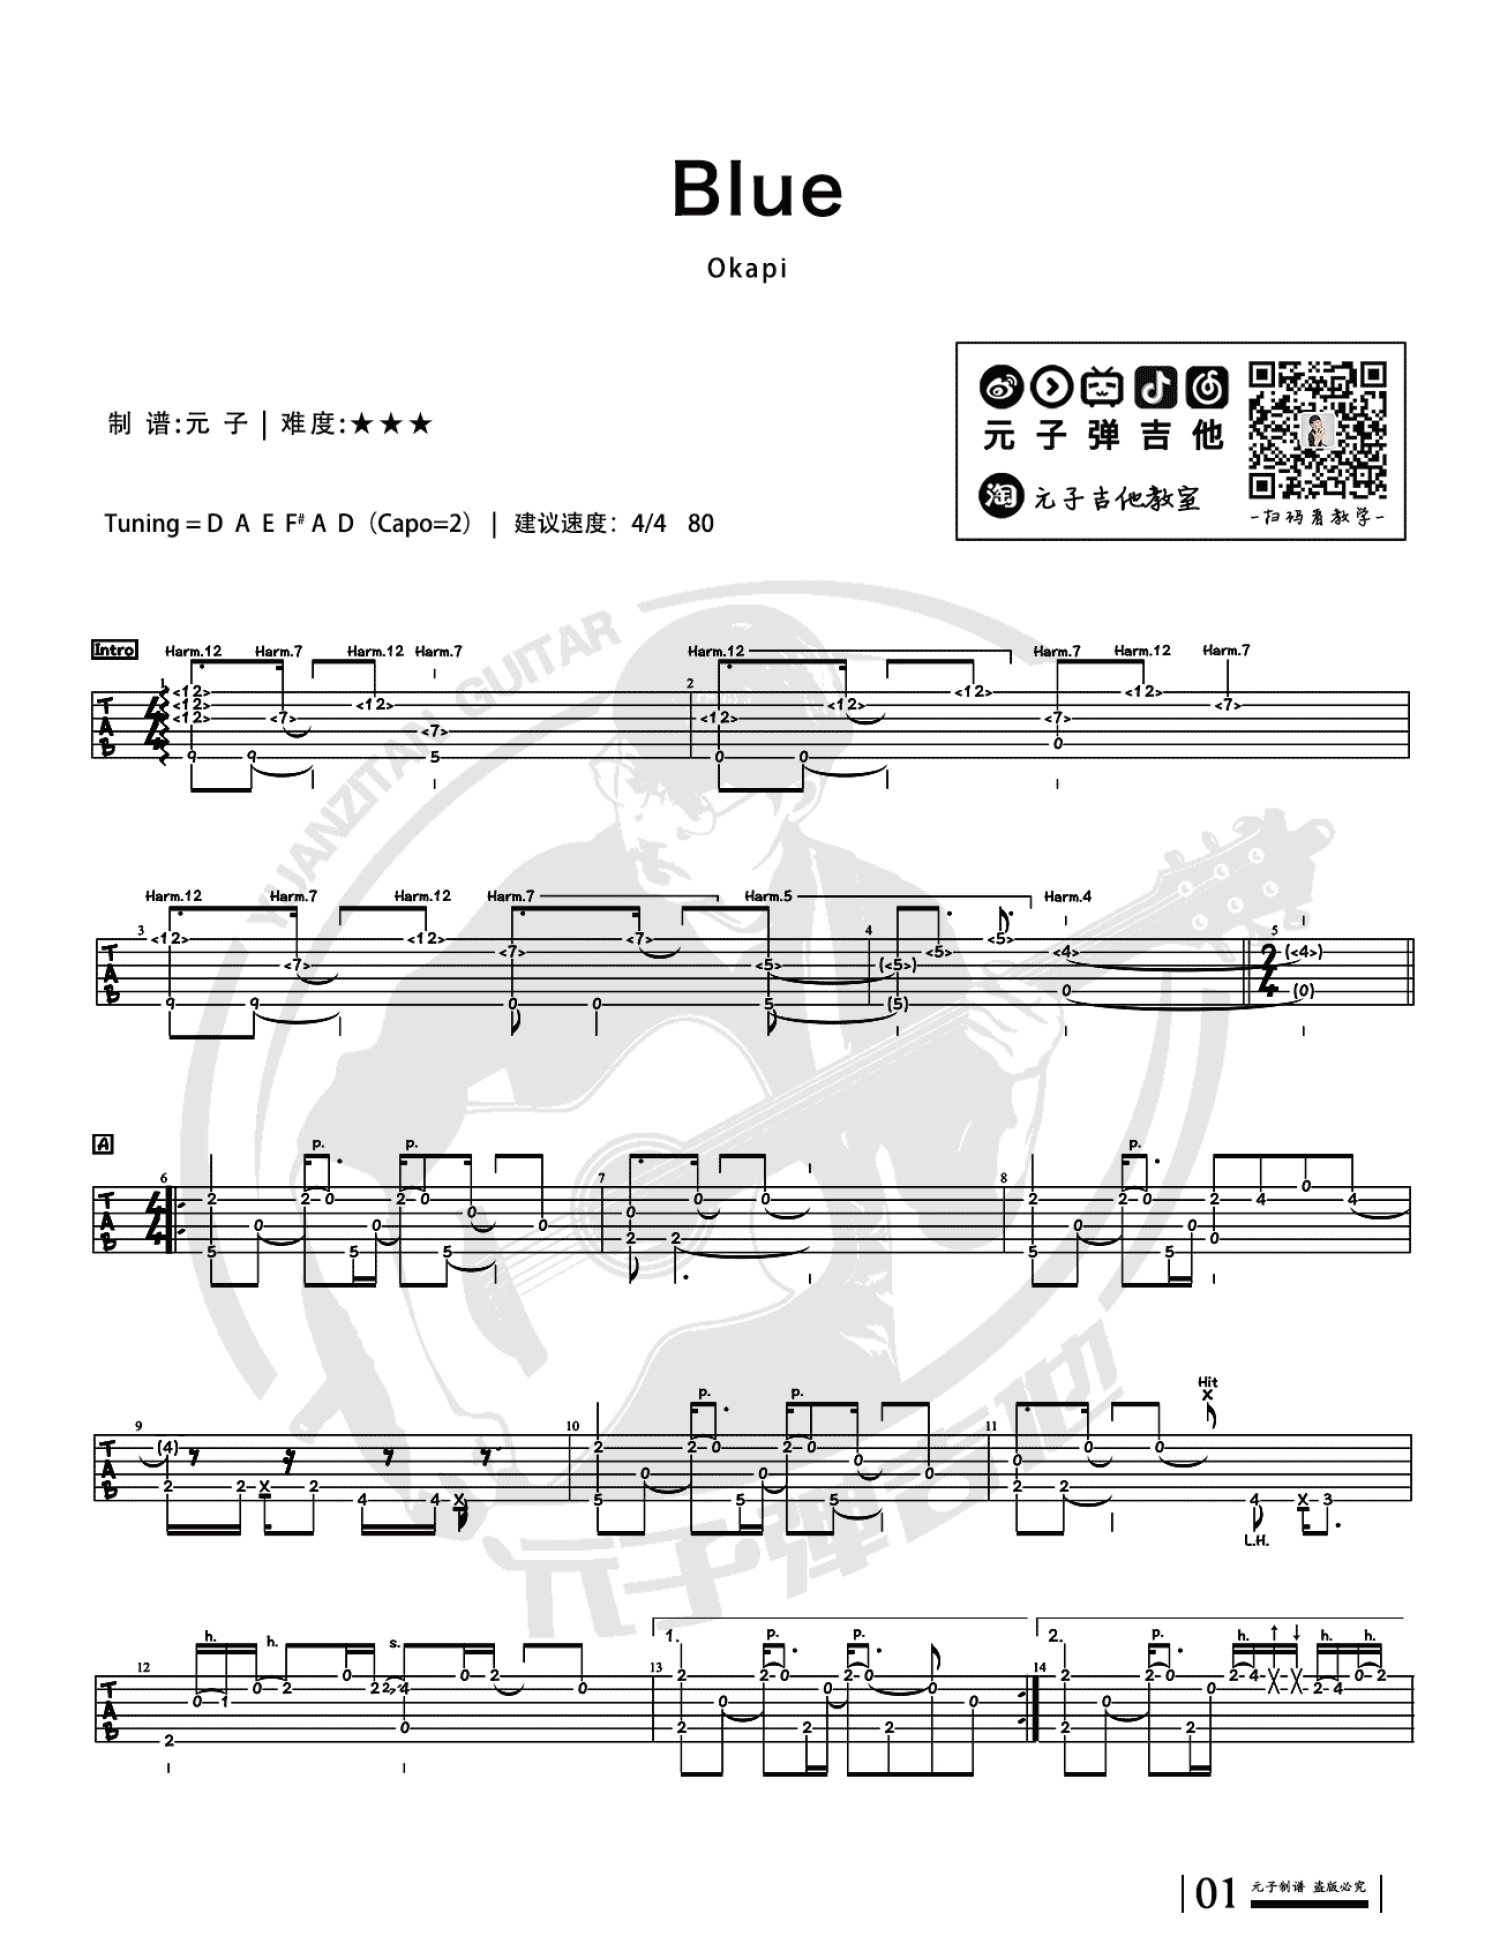 Blue on Blue Digital Sheet Music for Piano Organ Vocal Guitar Key of B Flat - Etsy